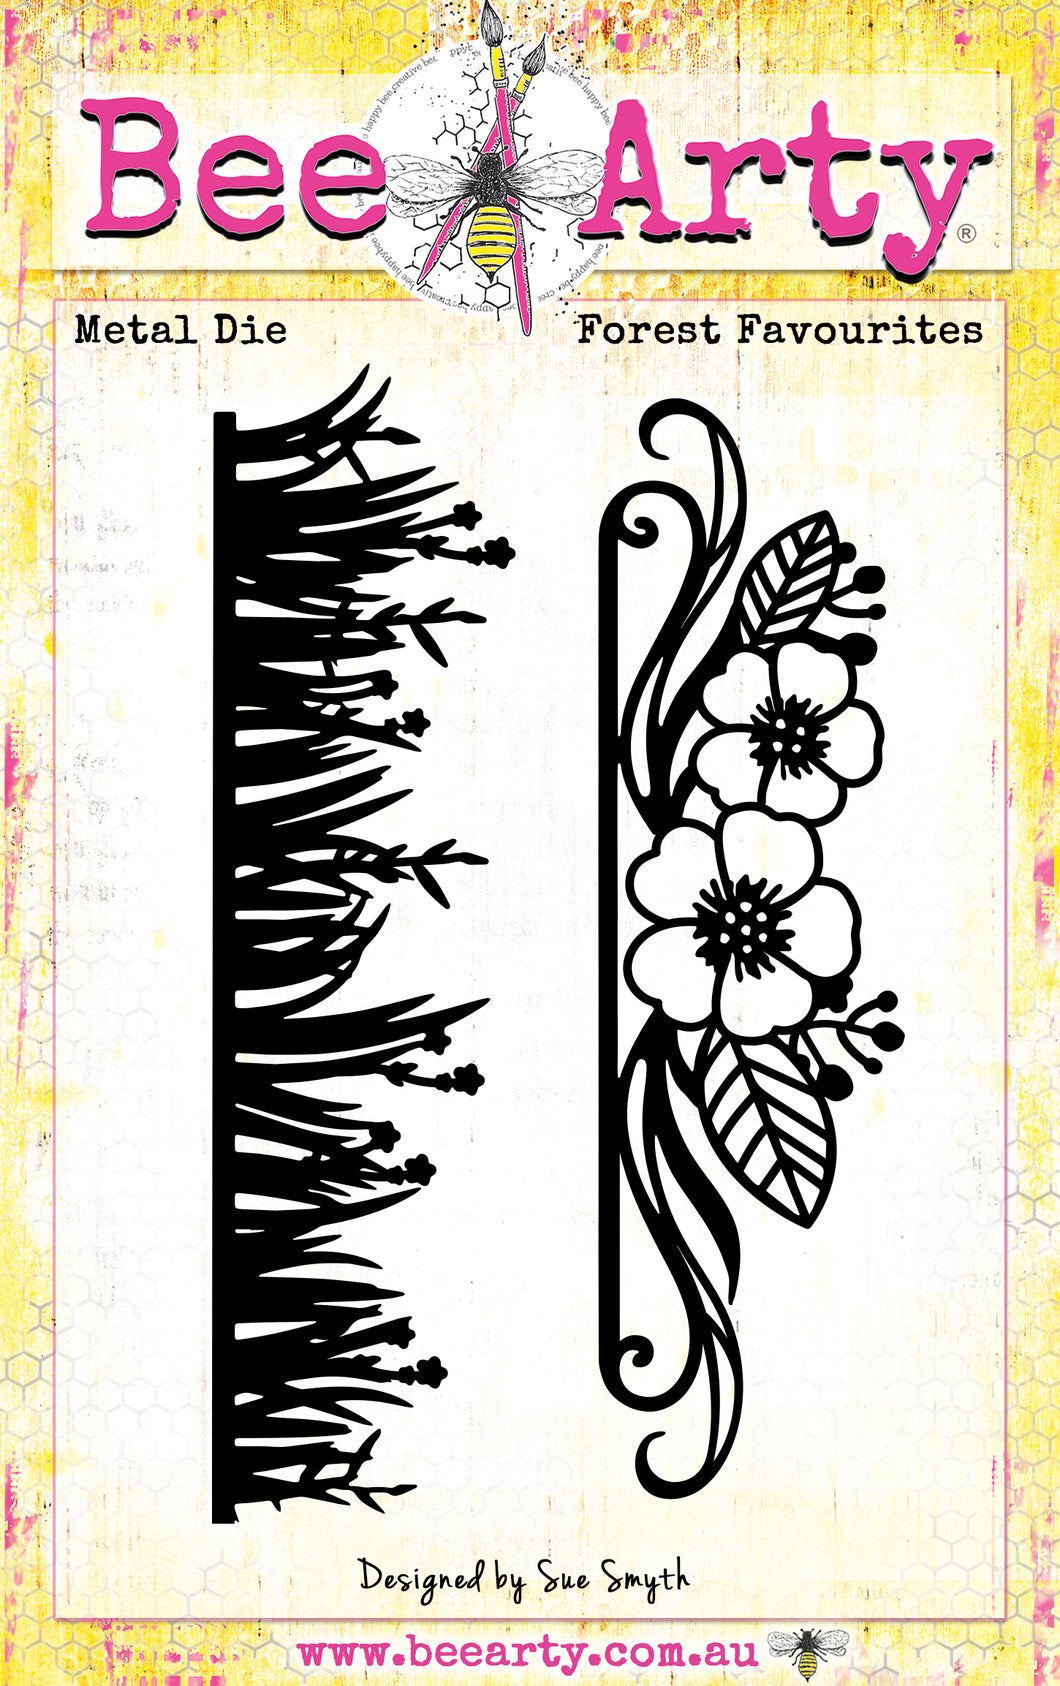 Forest Favourites - Metal Die